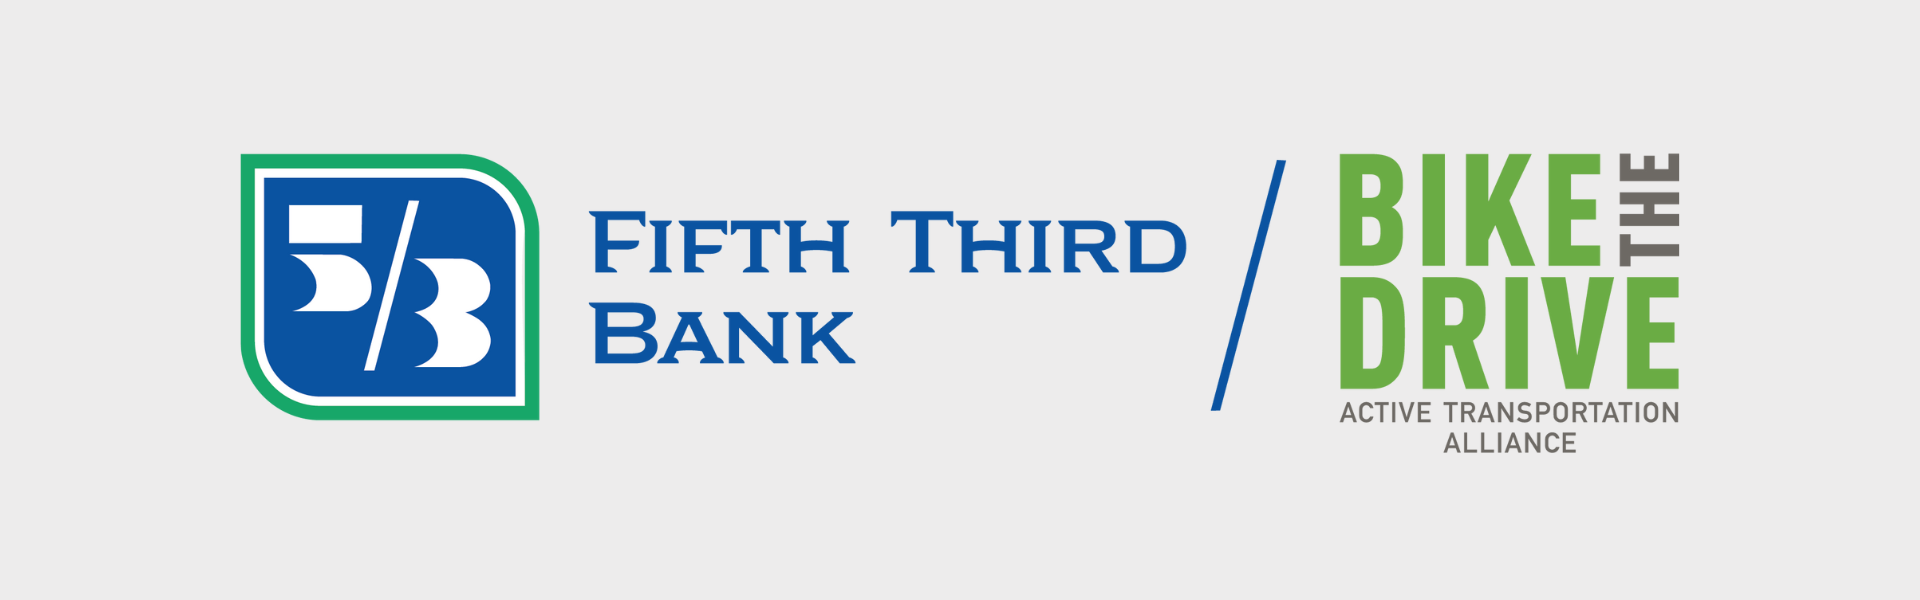 Fifth Third Bank Bike the Drive